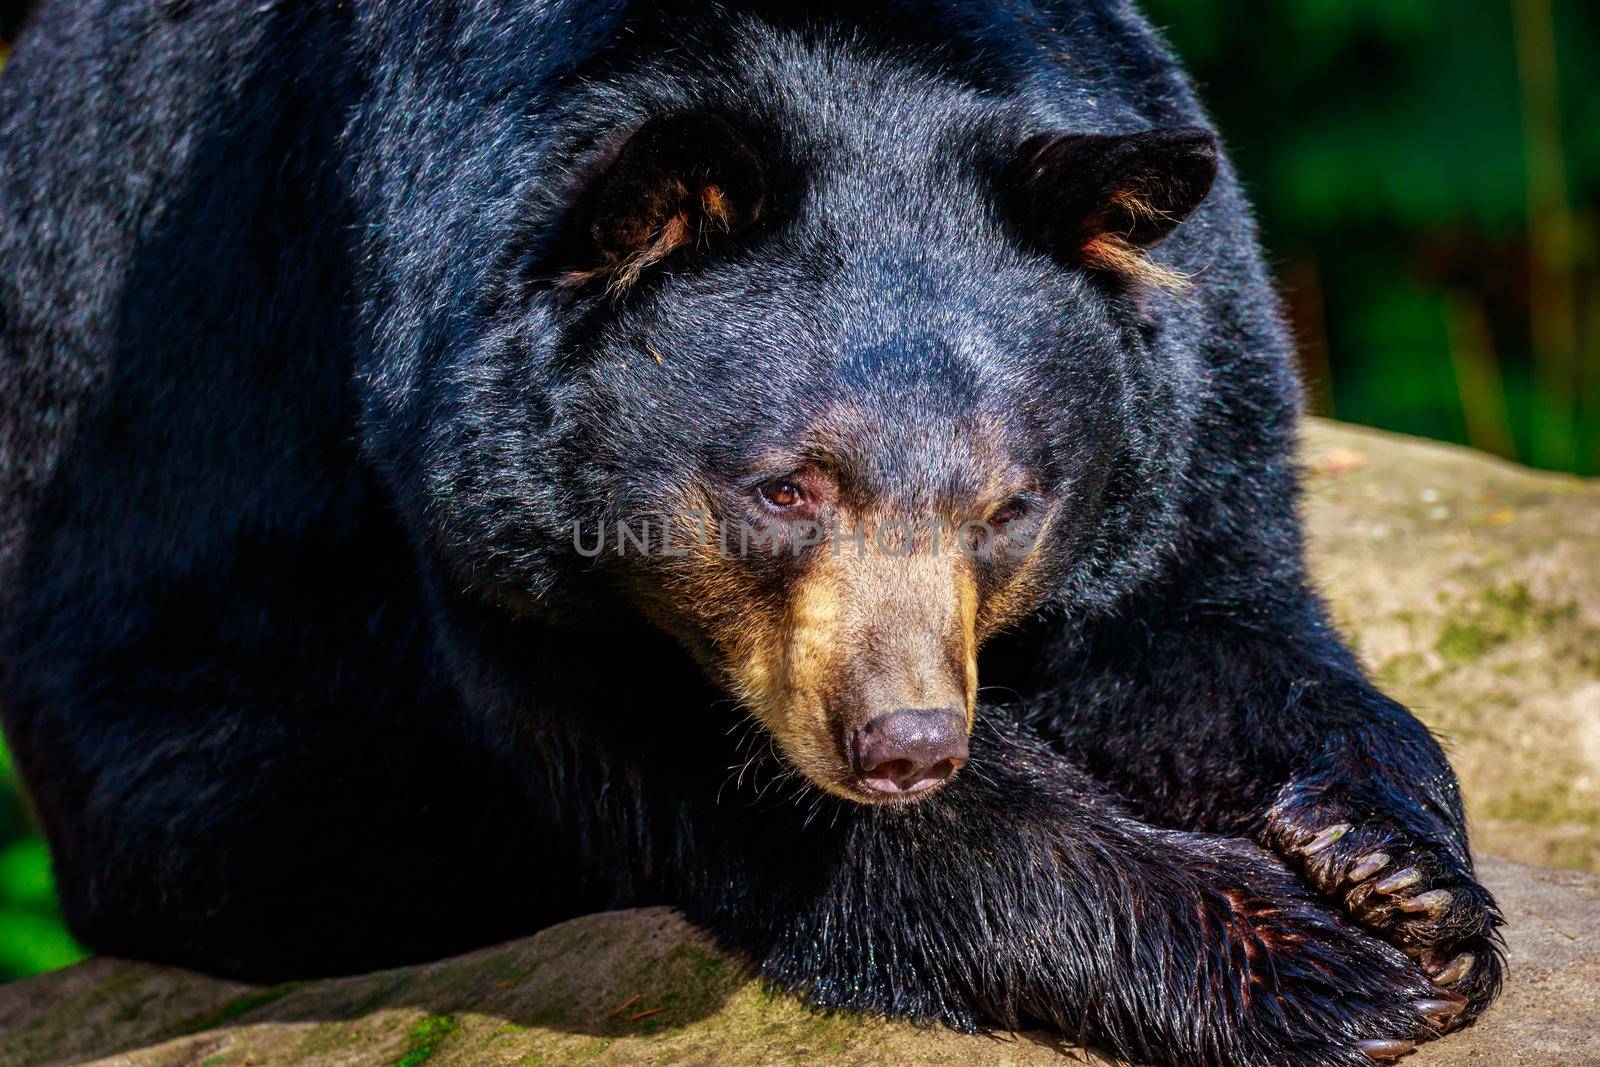 Close-up of an american black bear, sunbathing on a rock.